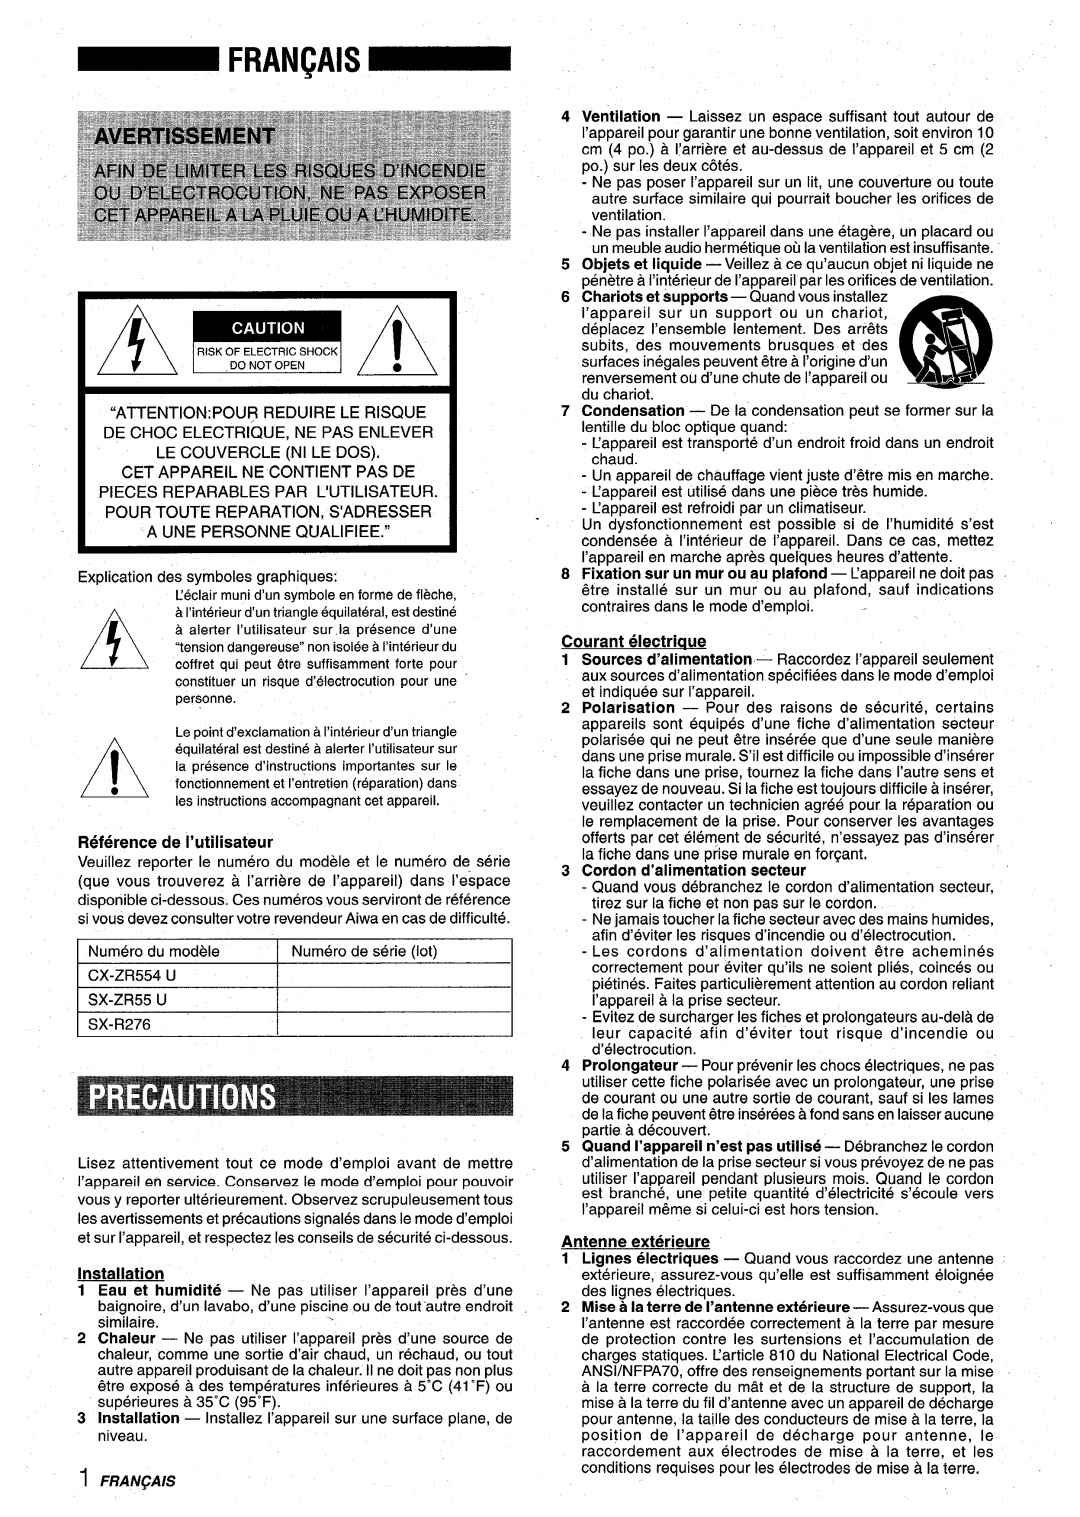 Aiwa XR-M75 manual Reference de I’utilisateur, Courant 61ectriaue, Antenne exterieure, M5!!!Em, Installation 